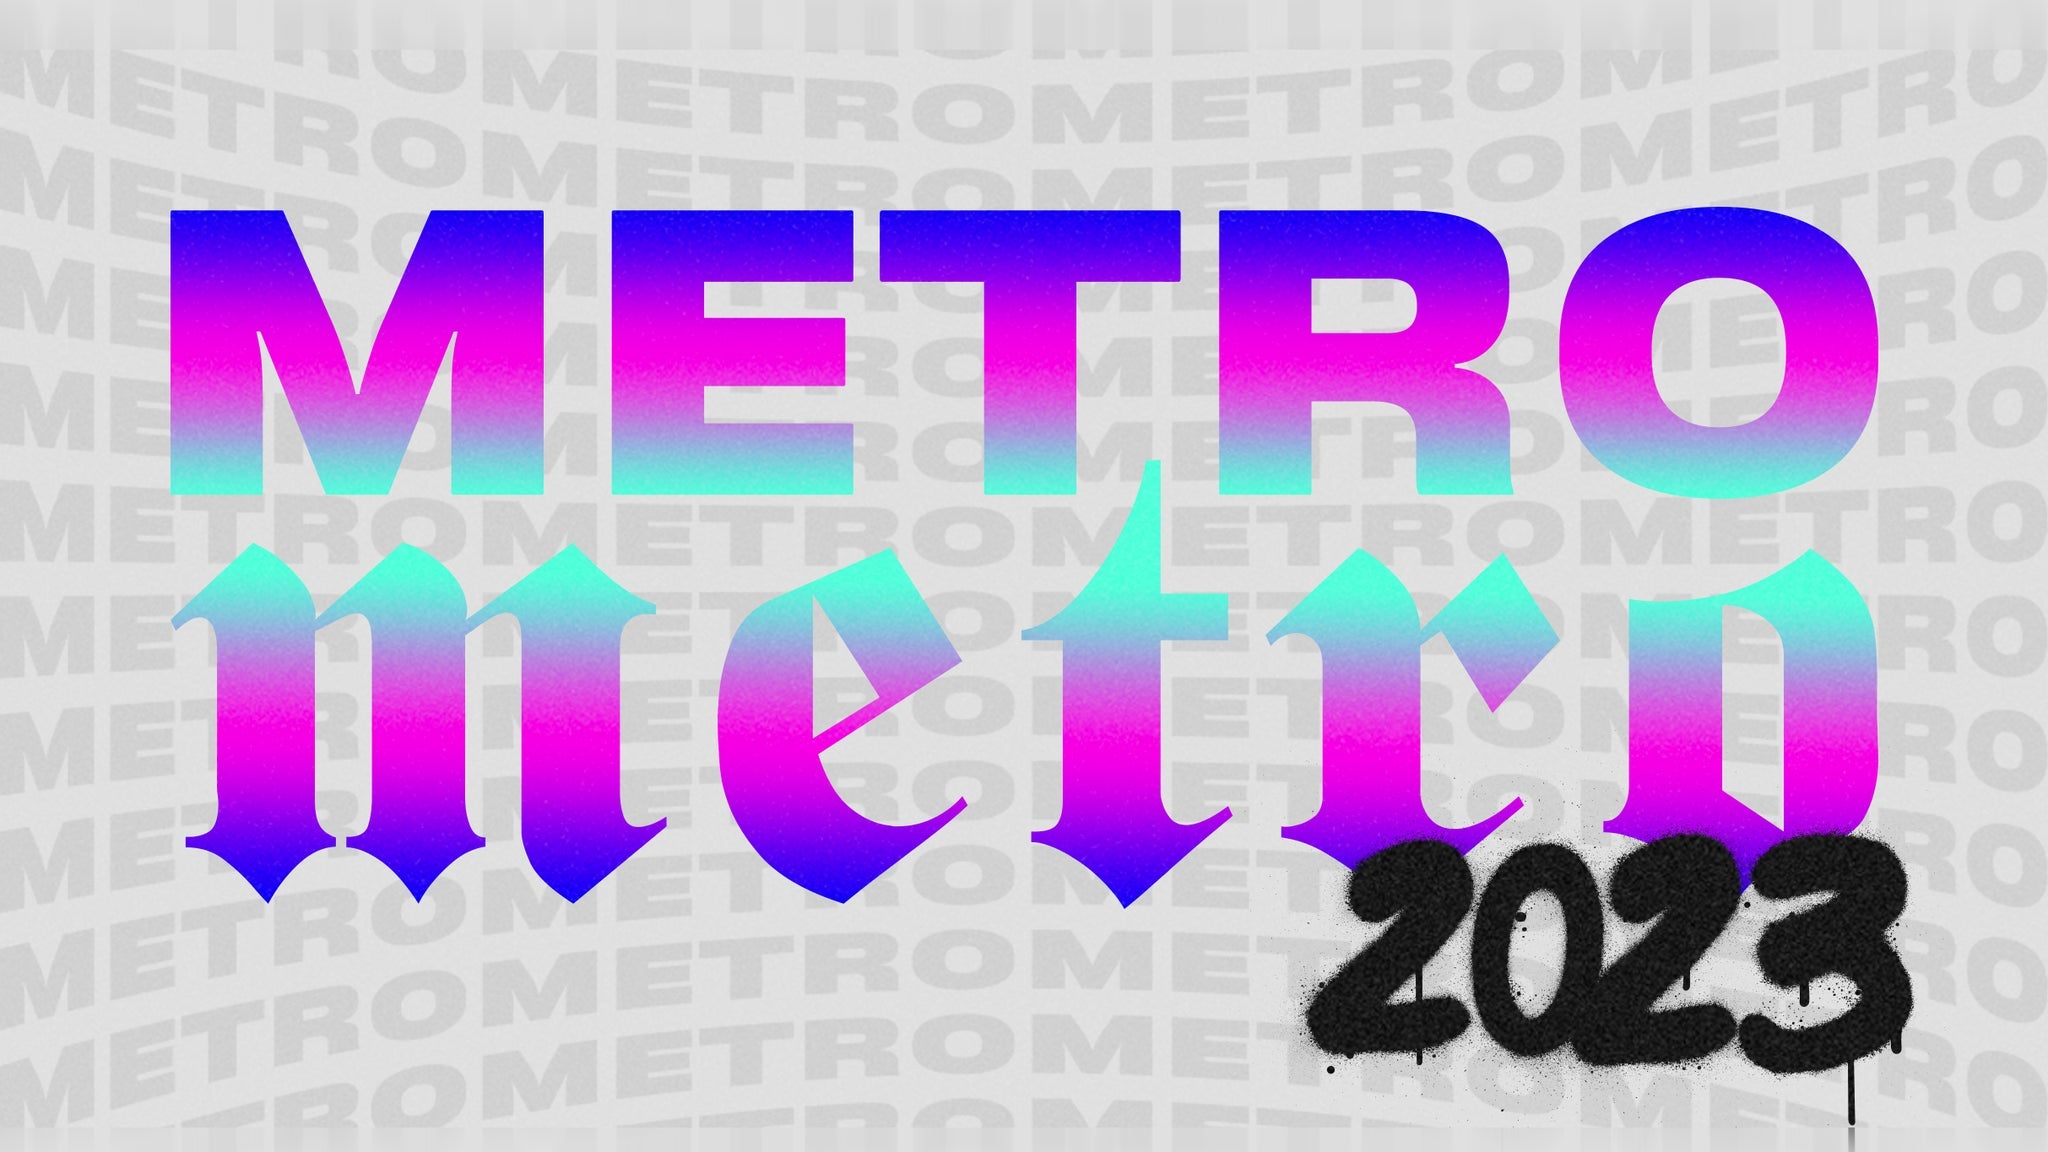 Billet 1 jour - Vendredi 19 mai - Festival Metro Metro 2023 in Montreal promo photo for Prévente Exclusive presale offer code